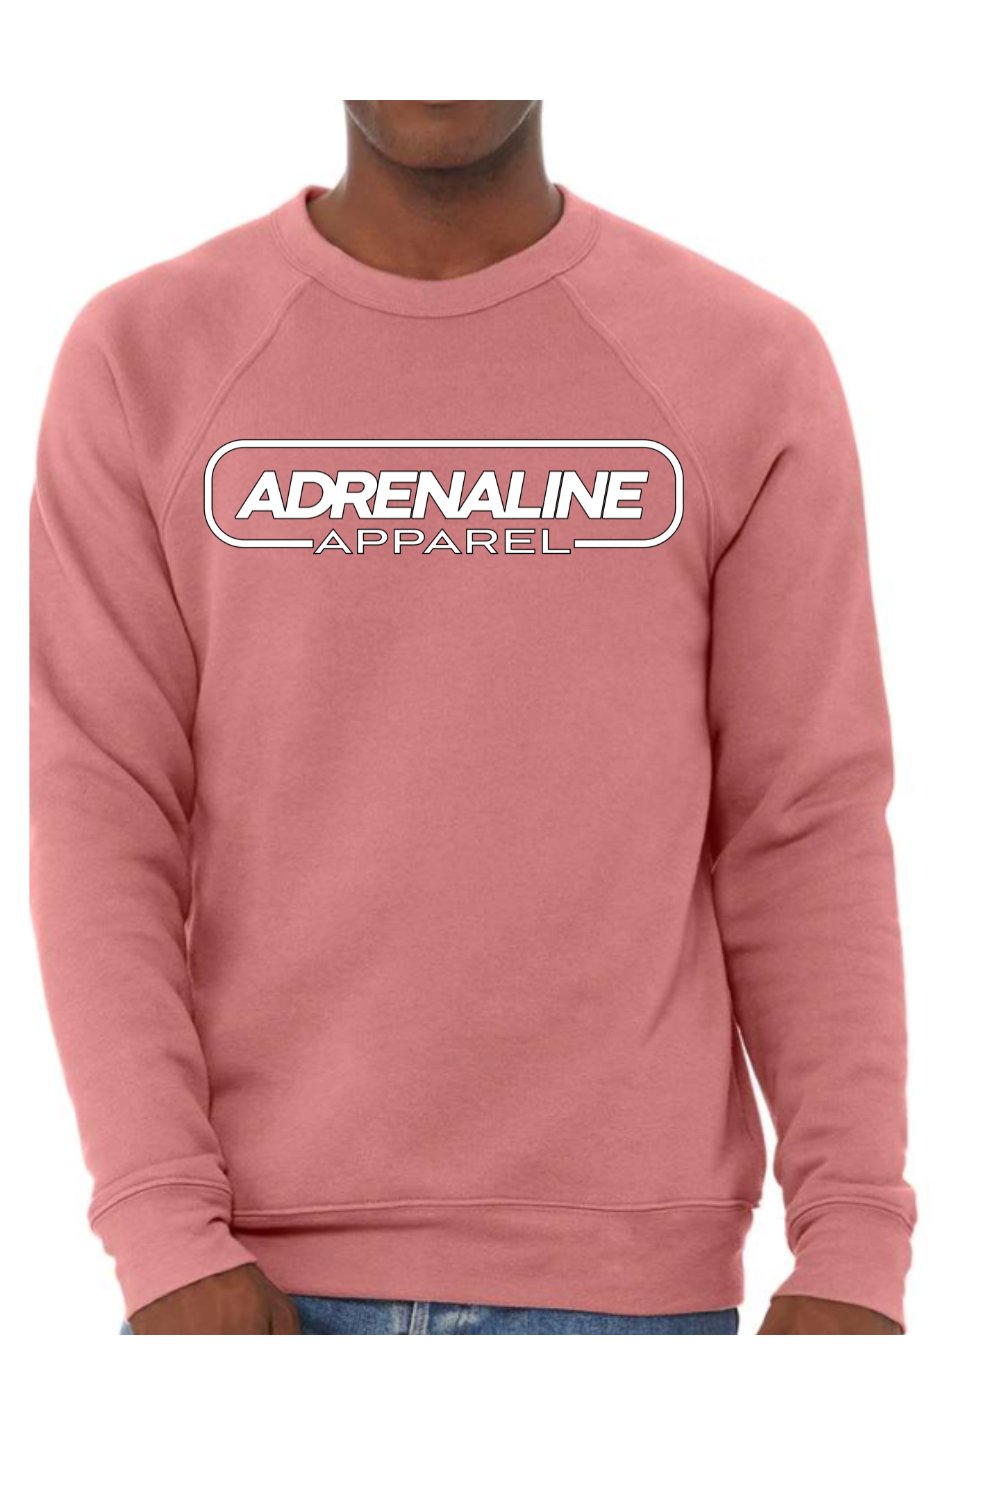 Adrenaline Mens/Ladies Crewneck Sweatshirt - AdrenalineApparel